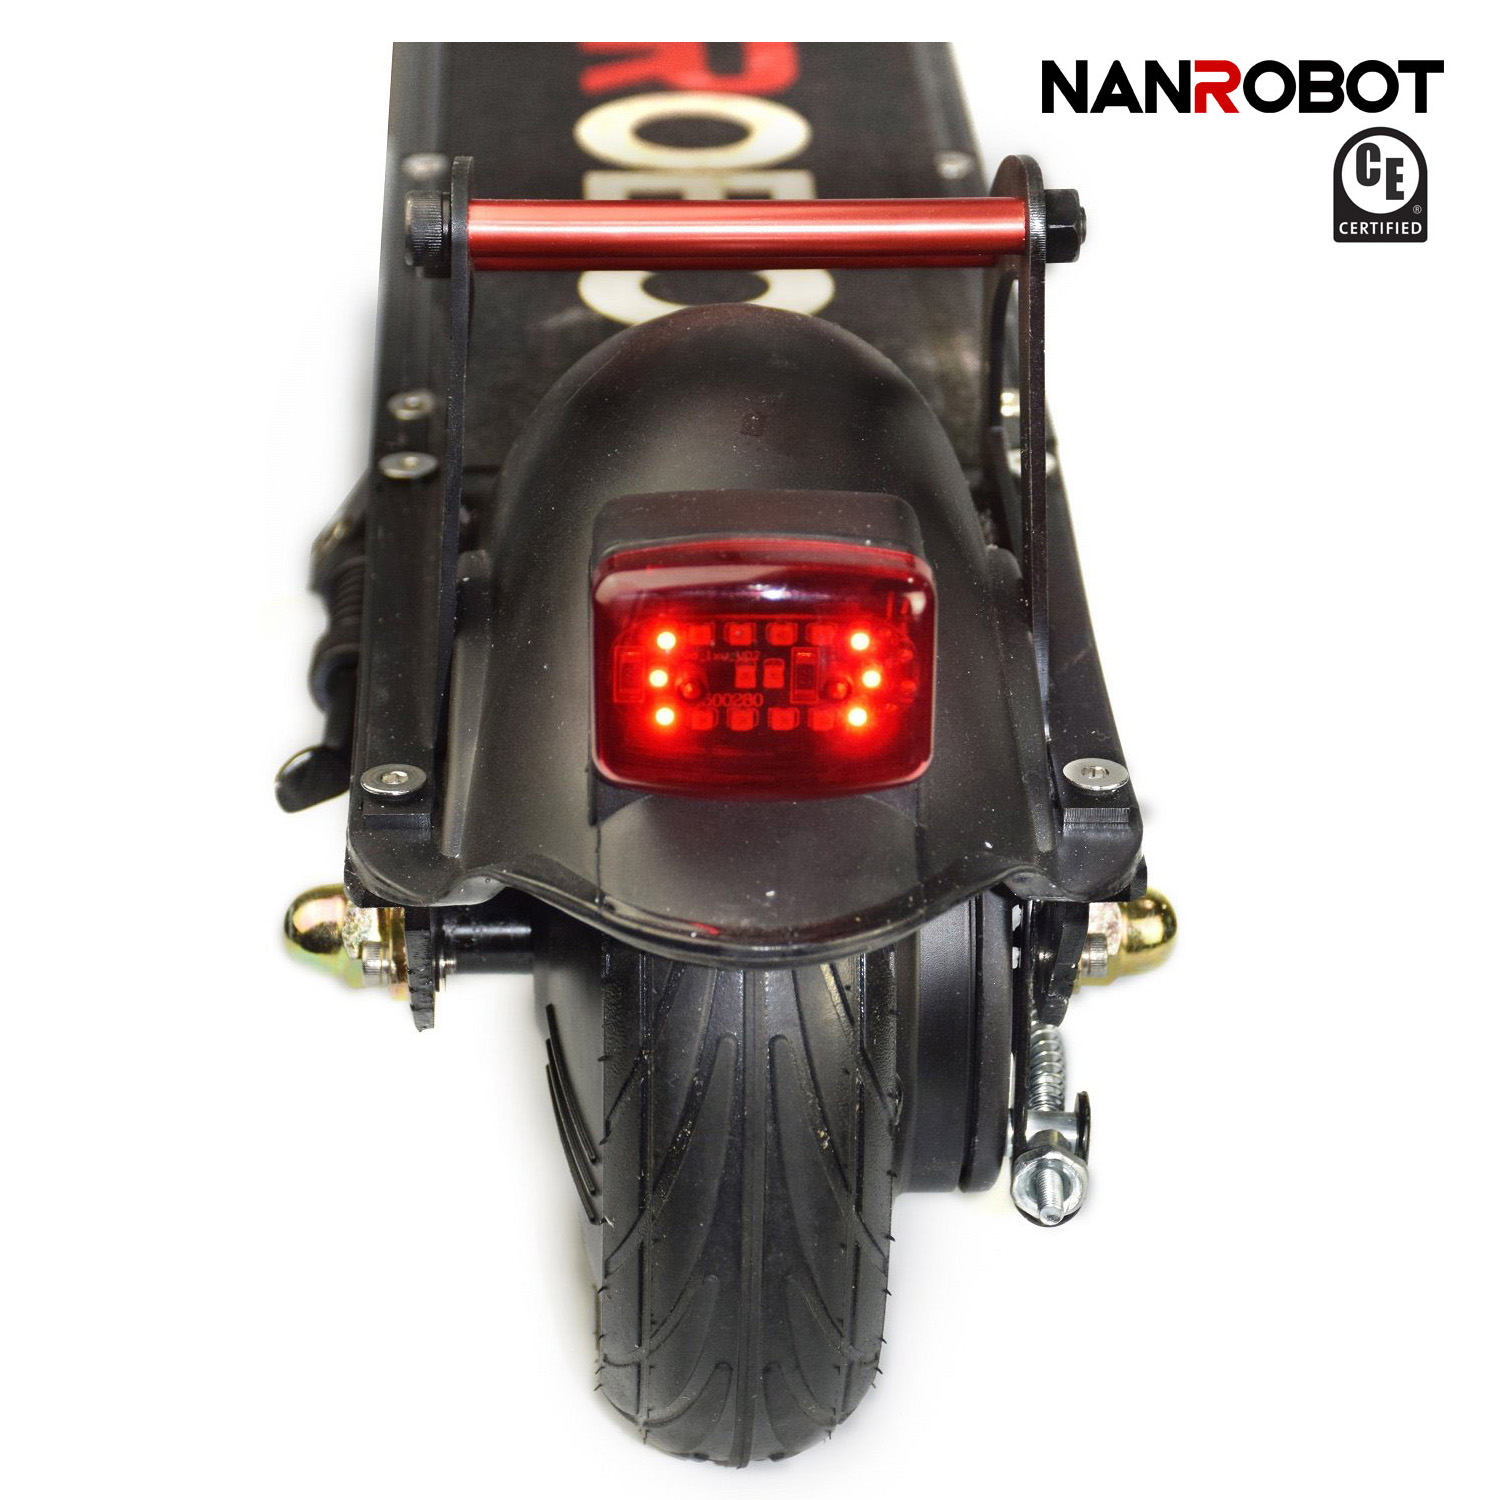 China OEM Motos Electricas Supplier –  NANROBOT X4 ELECTRIC SCOOTER -500W-48V 10.4A – Nanrobot detail pictures